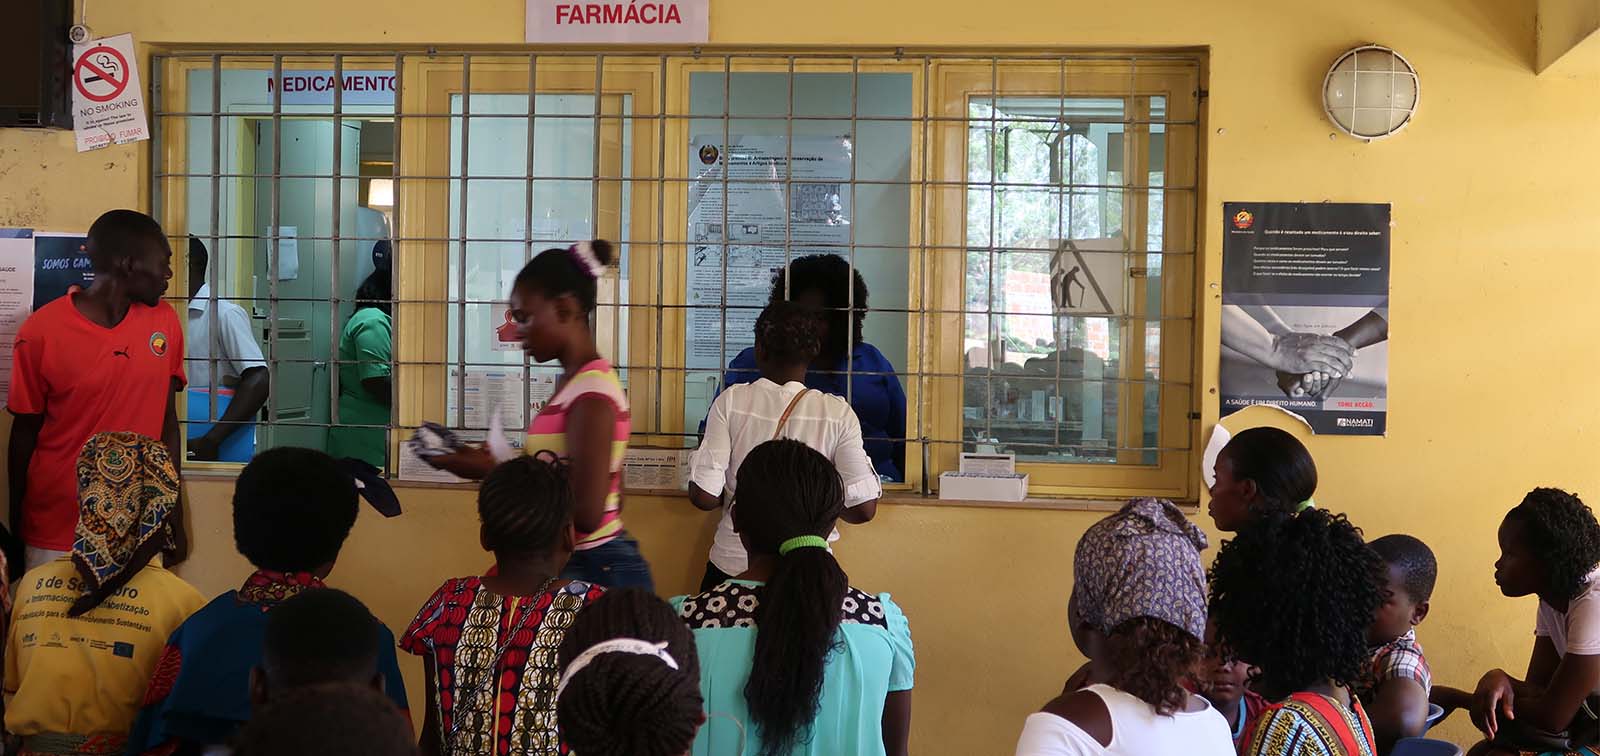 Grupo de pacientes ante la farmacia del Hospital de Manhiça, Mozambique.